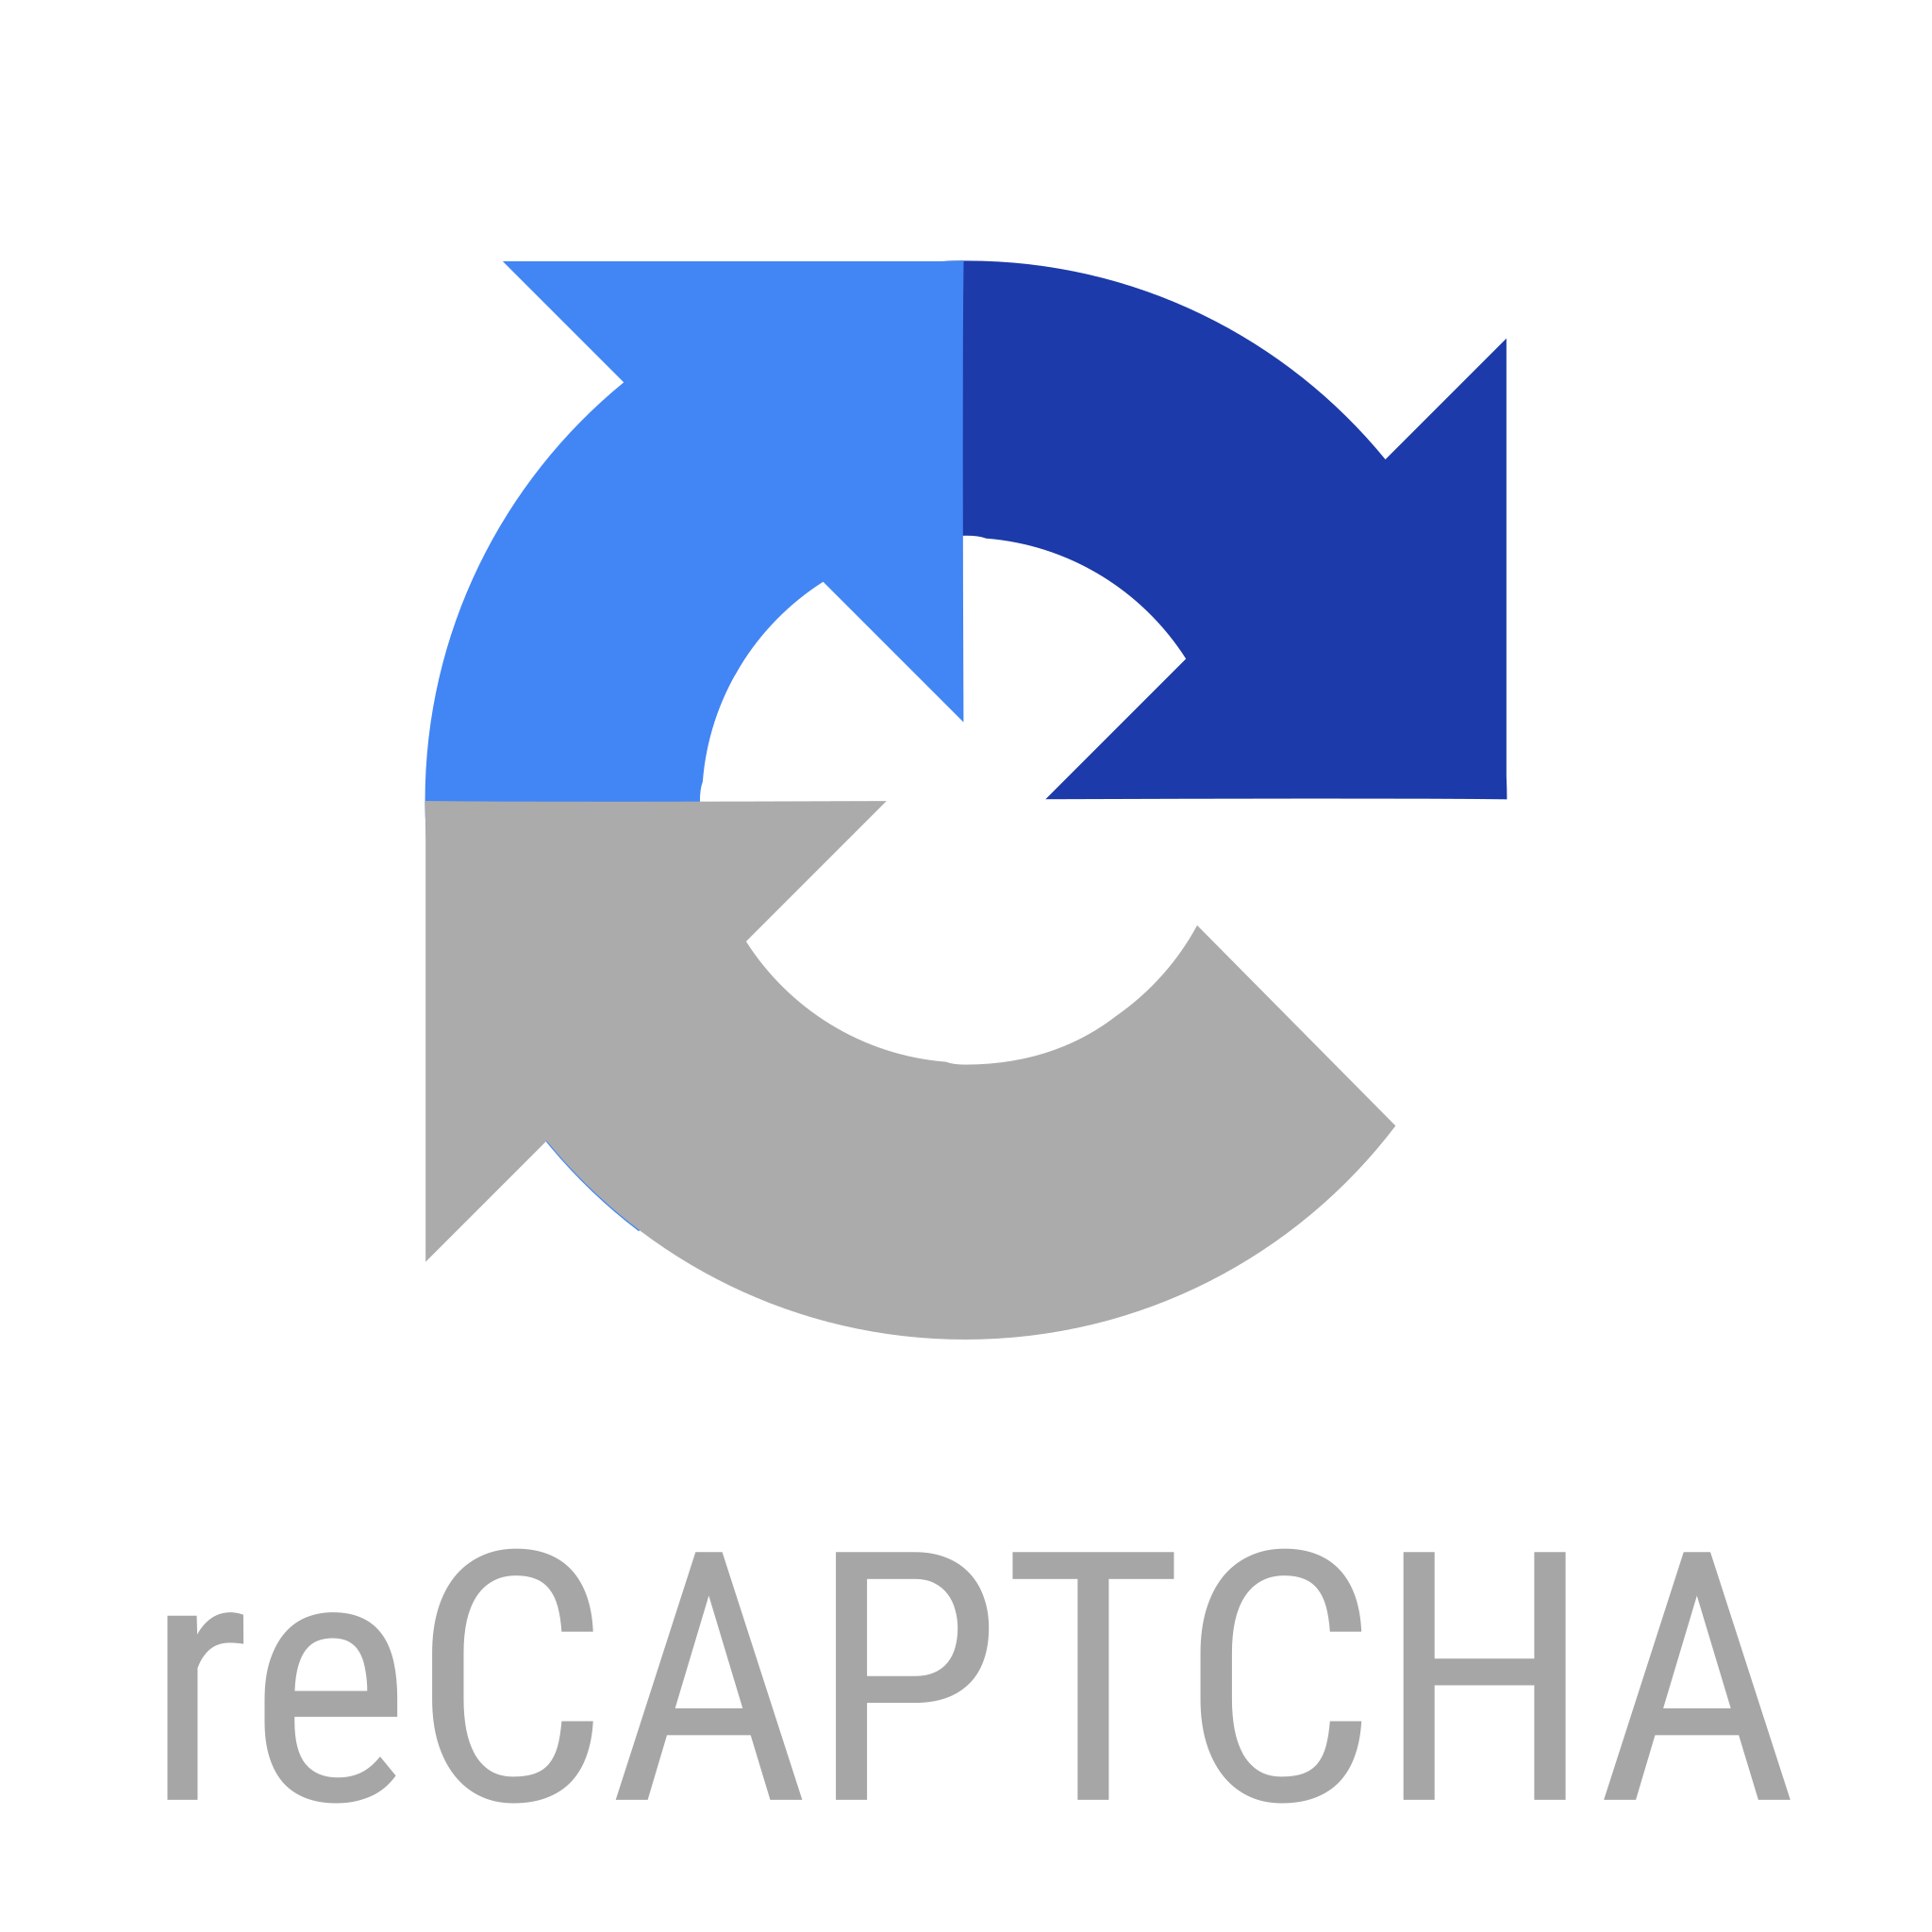 RecaptchaLogo